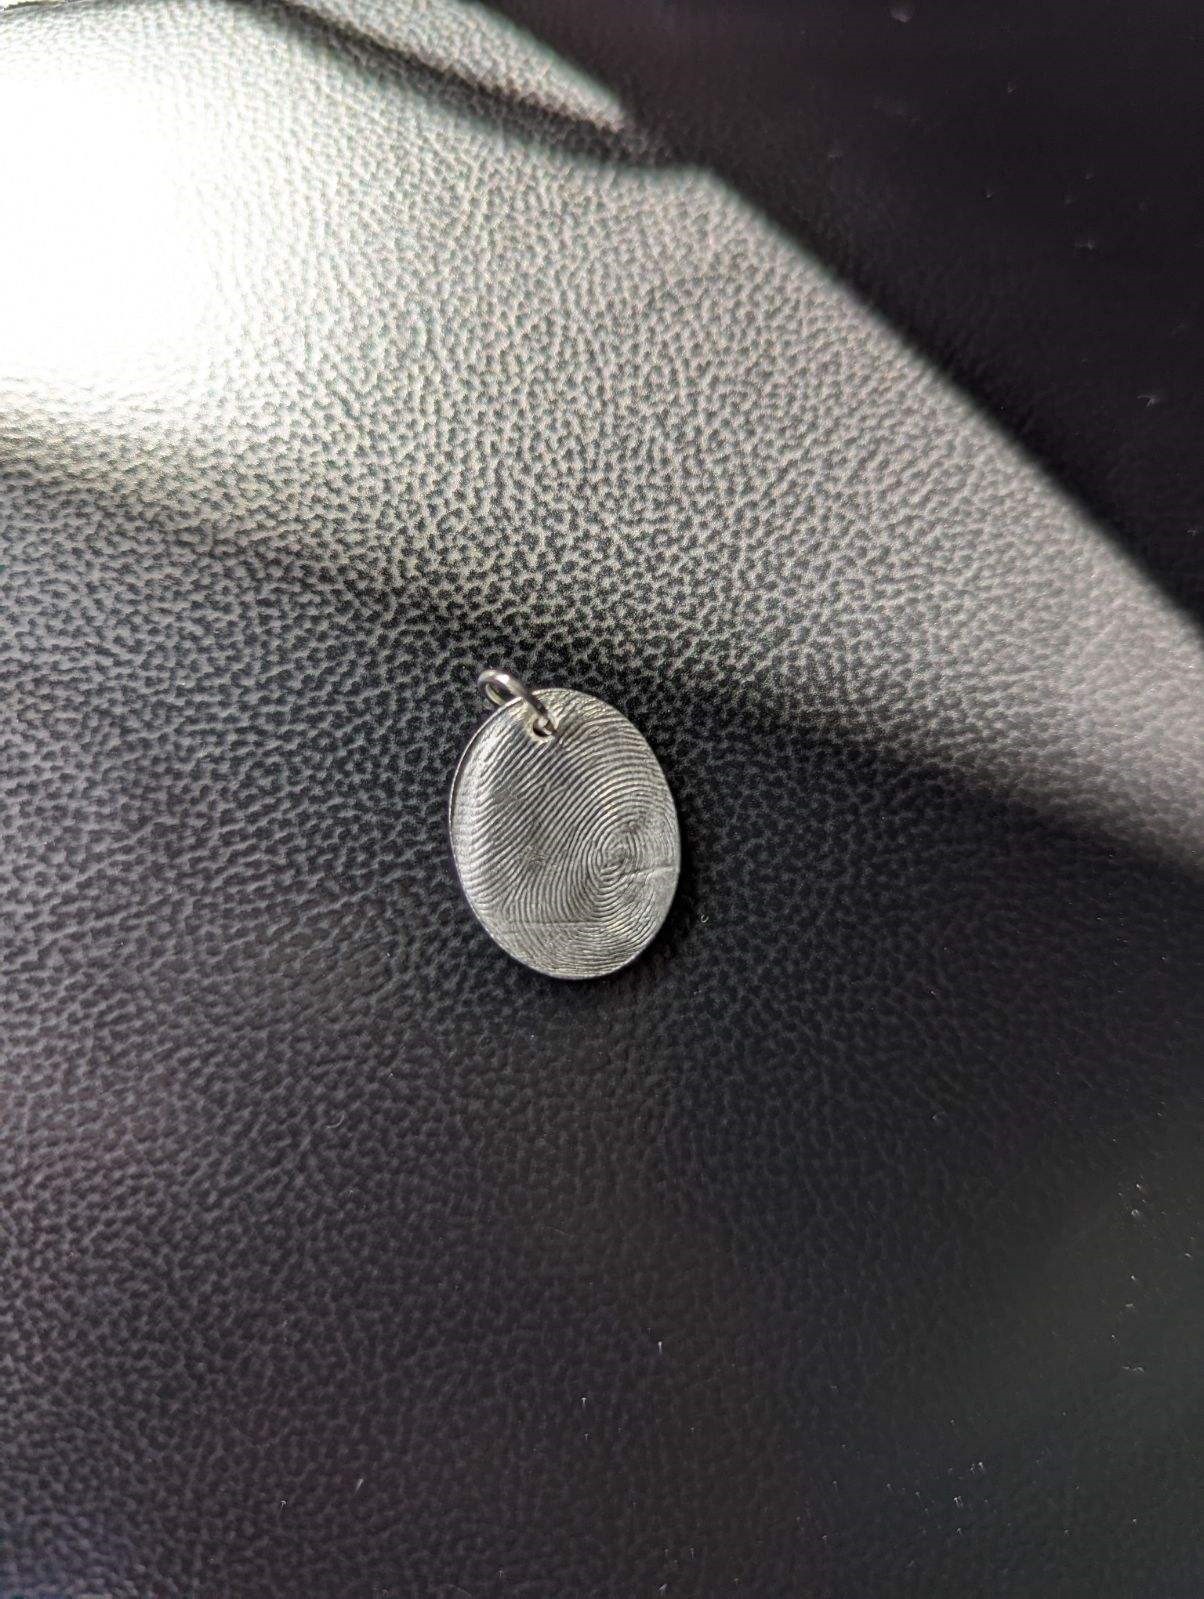 Silver fingerprint charm on a dark background.